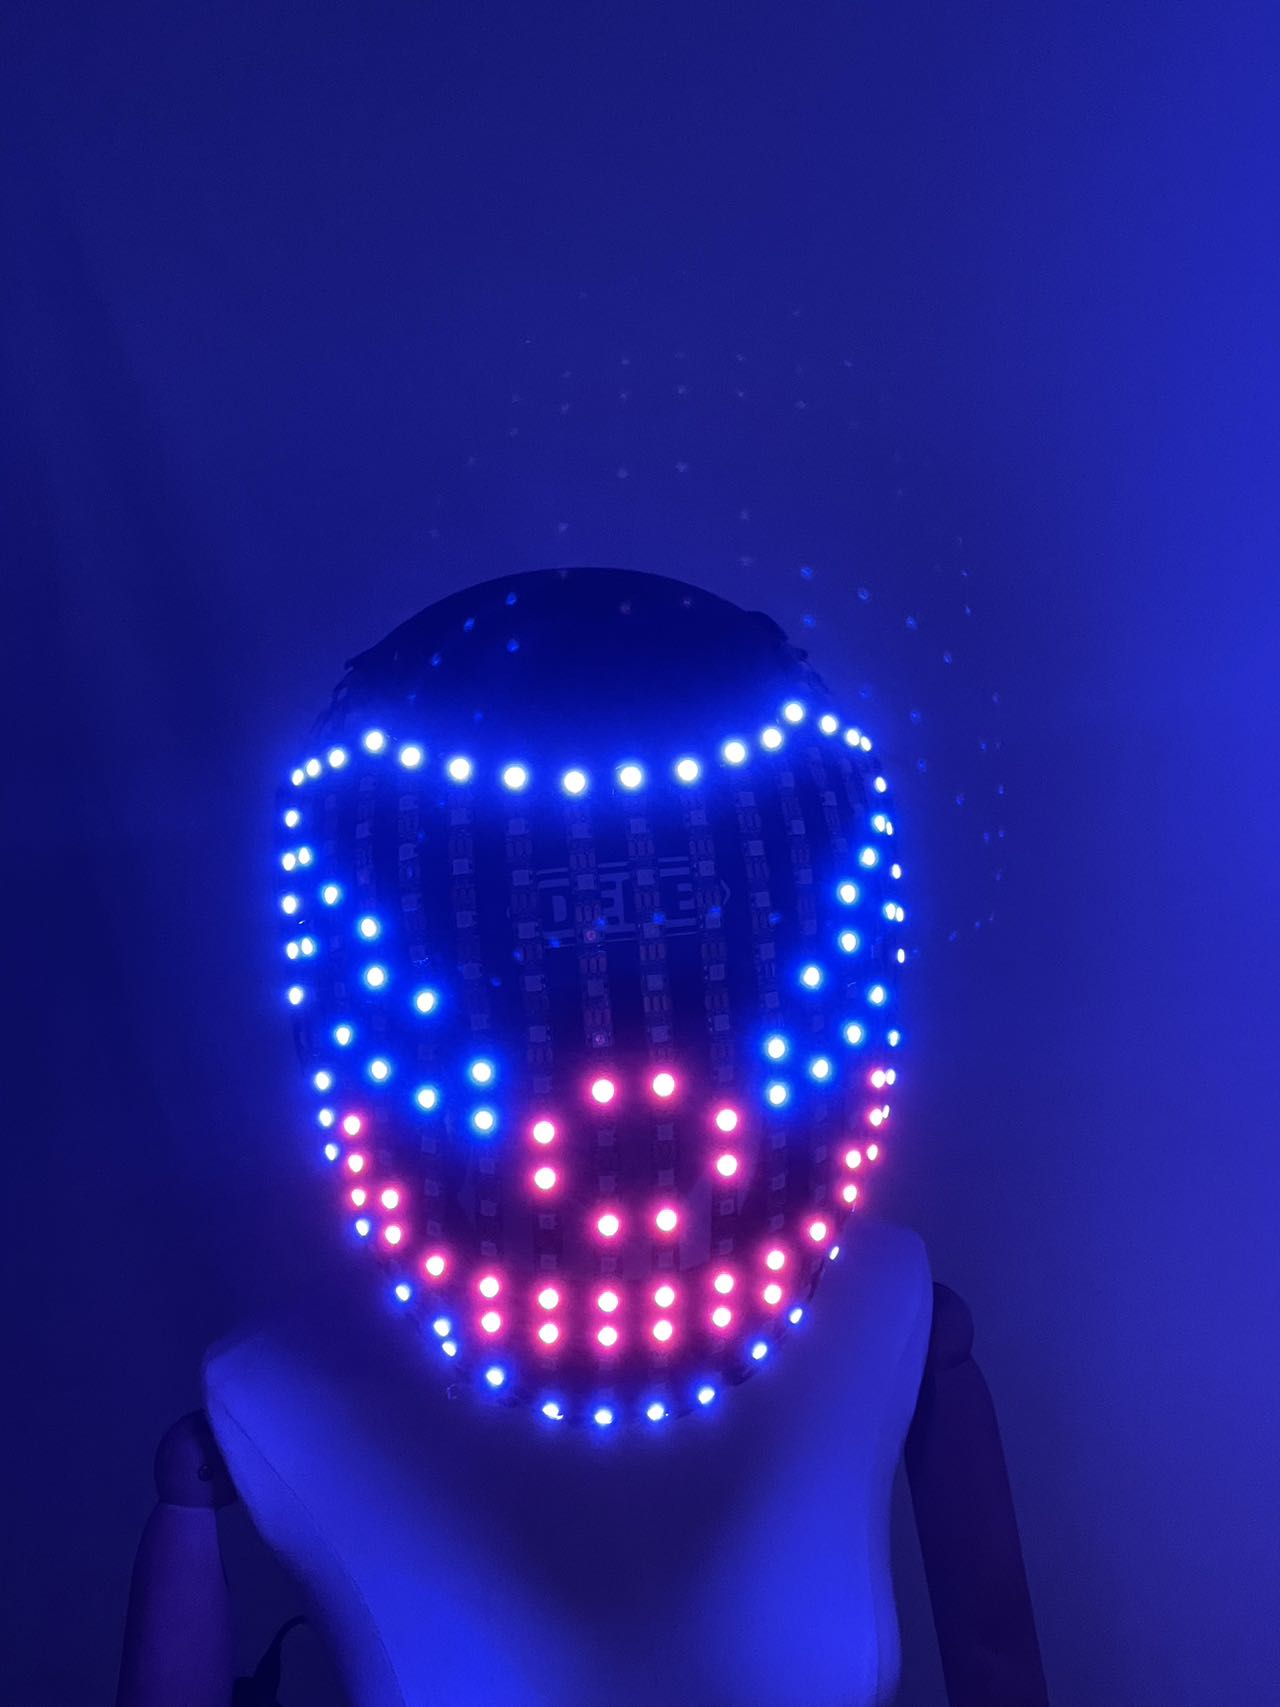 LED Helmet Illuminating Head Wearable Mask Lighting Up Costume Props For Stage Performance Celebration Christmas Decoration